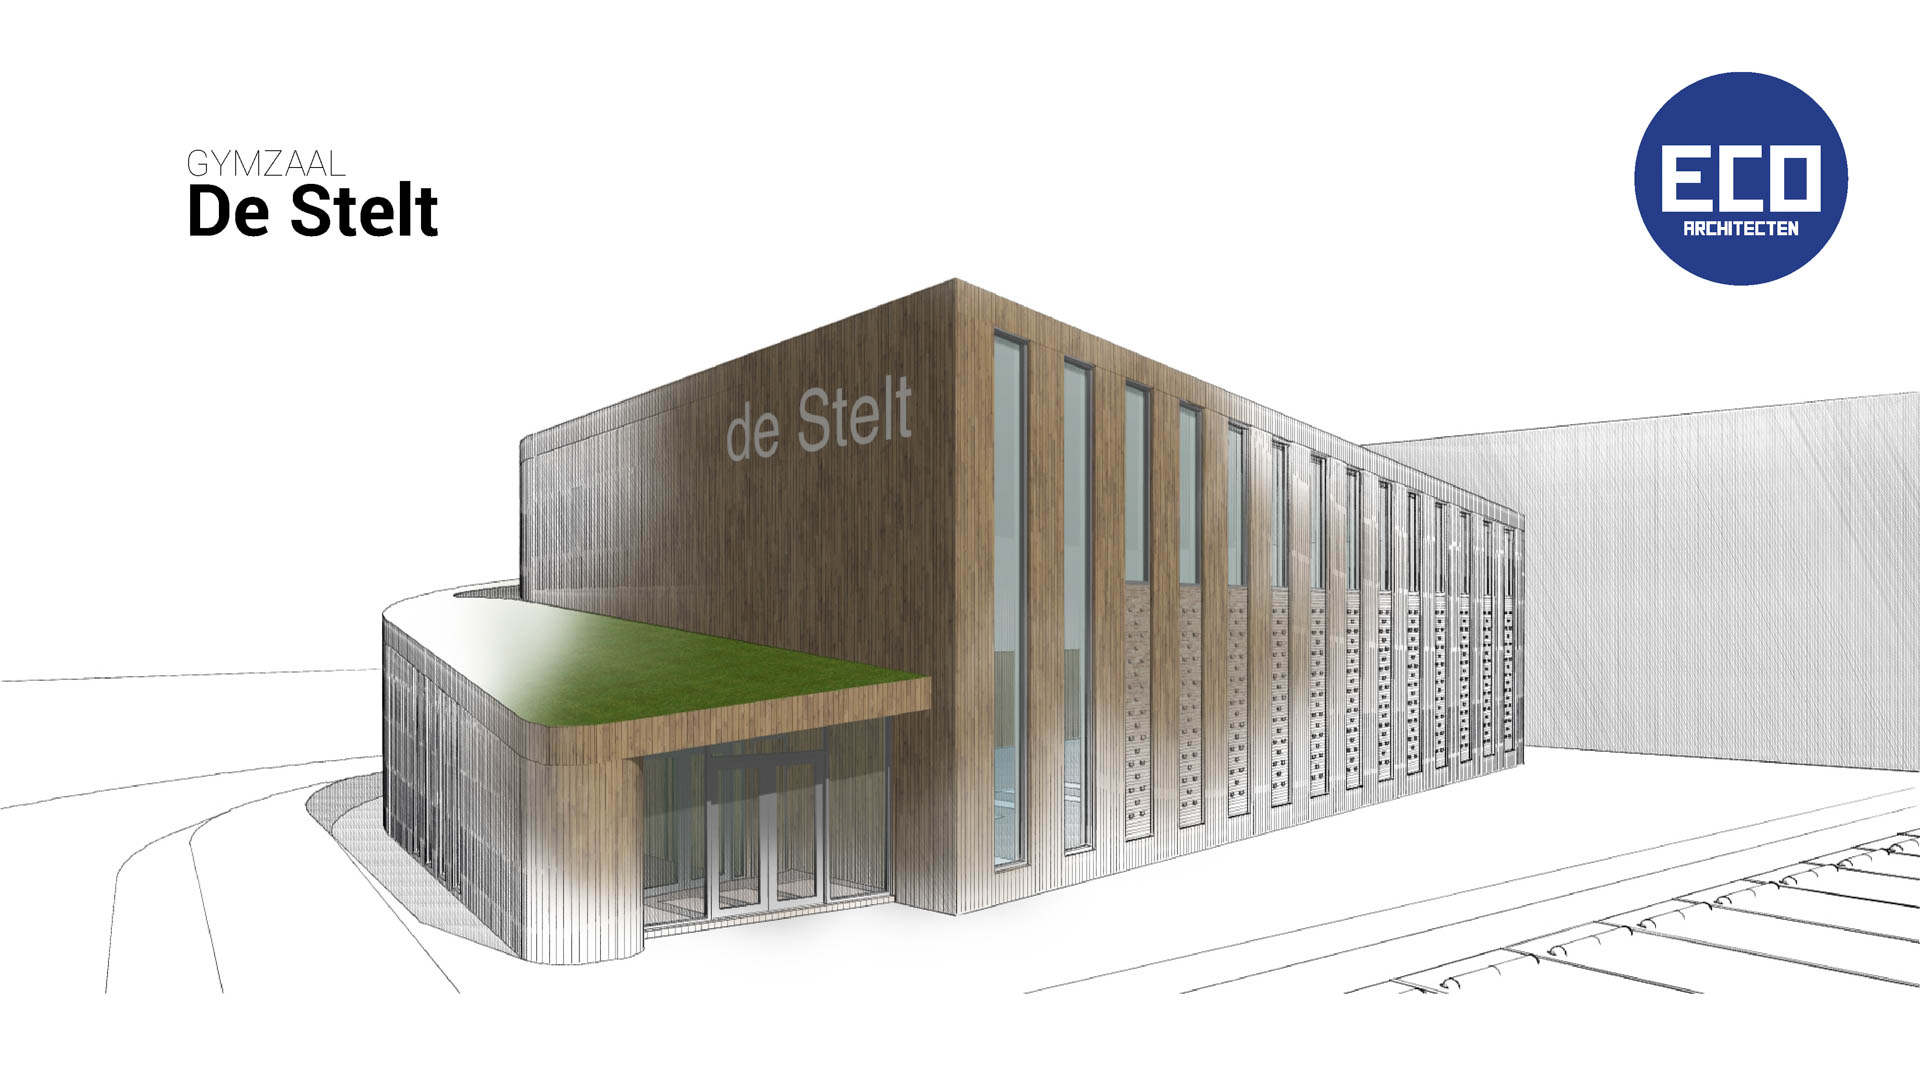 Gymzaal De Stelt - ECO architecten